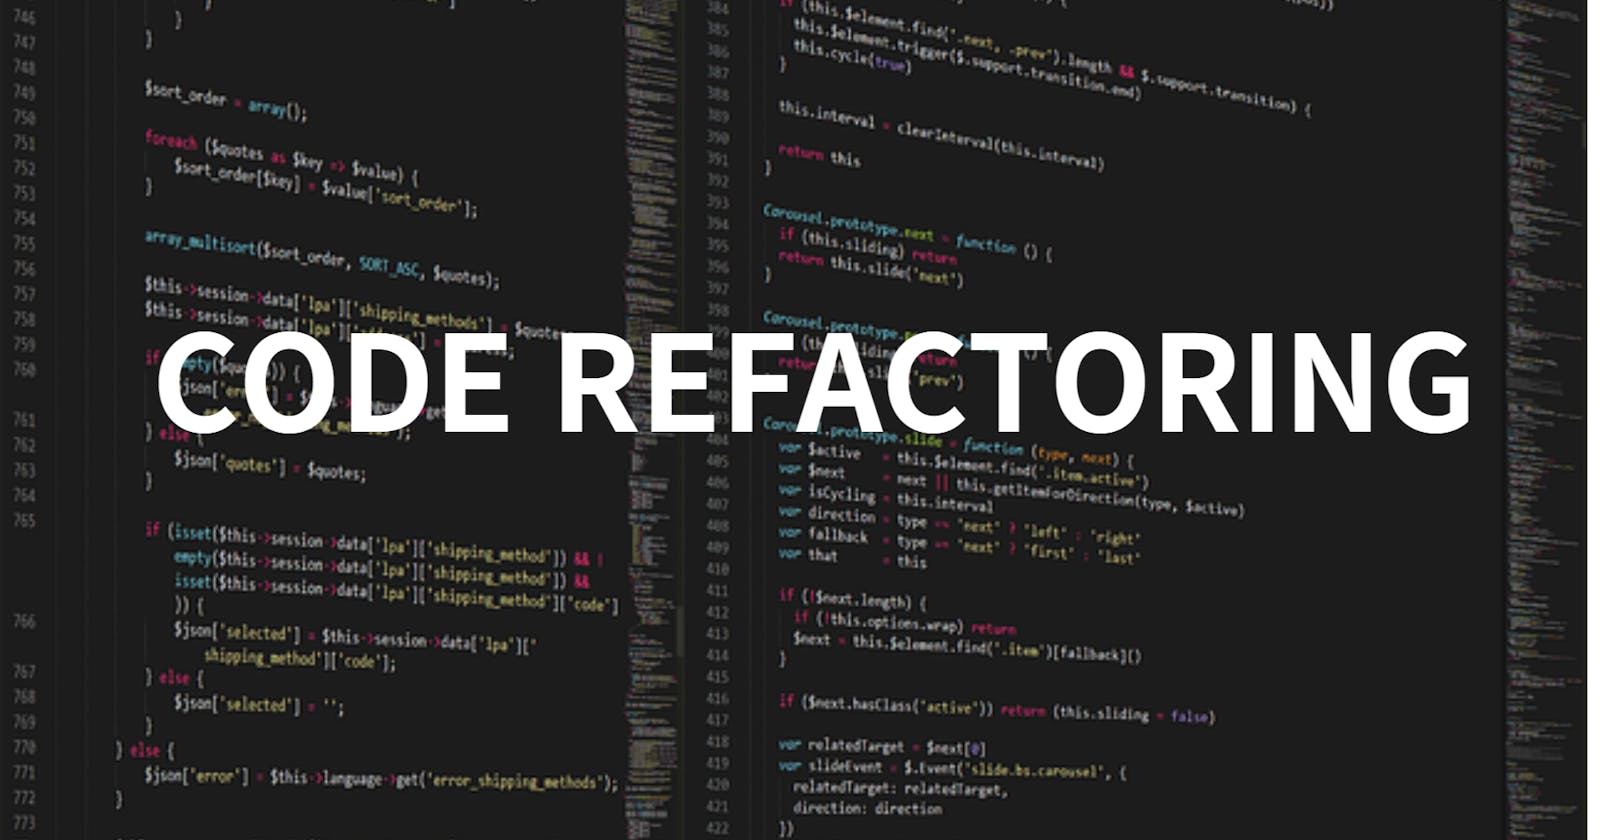 Code Refactoring summary